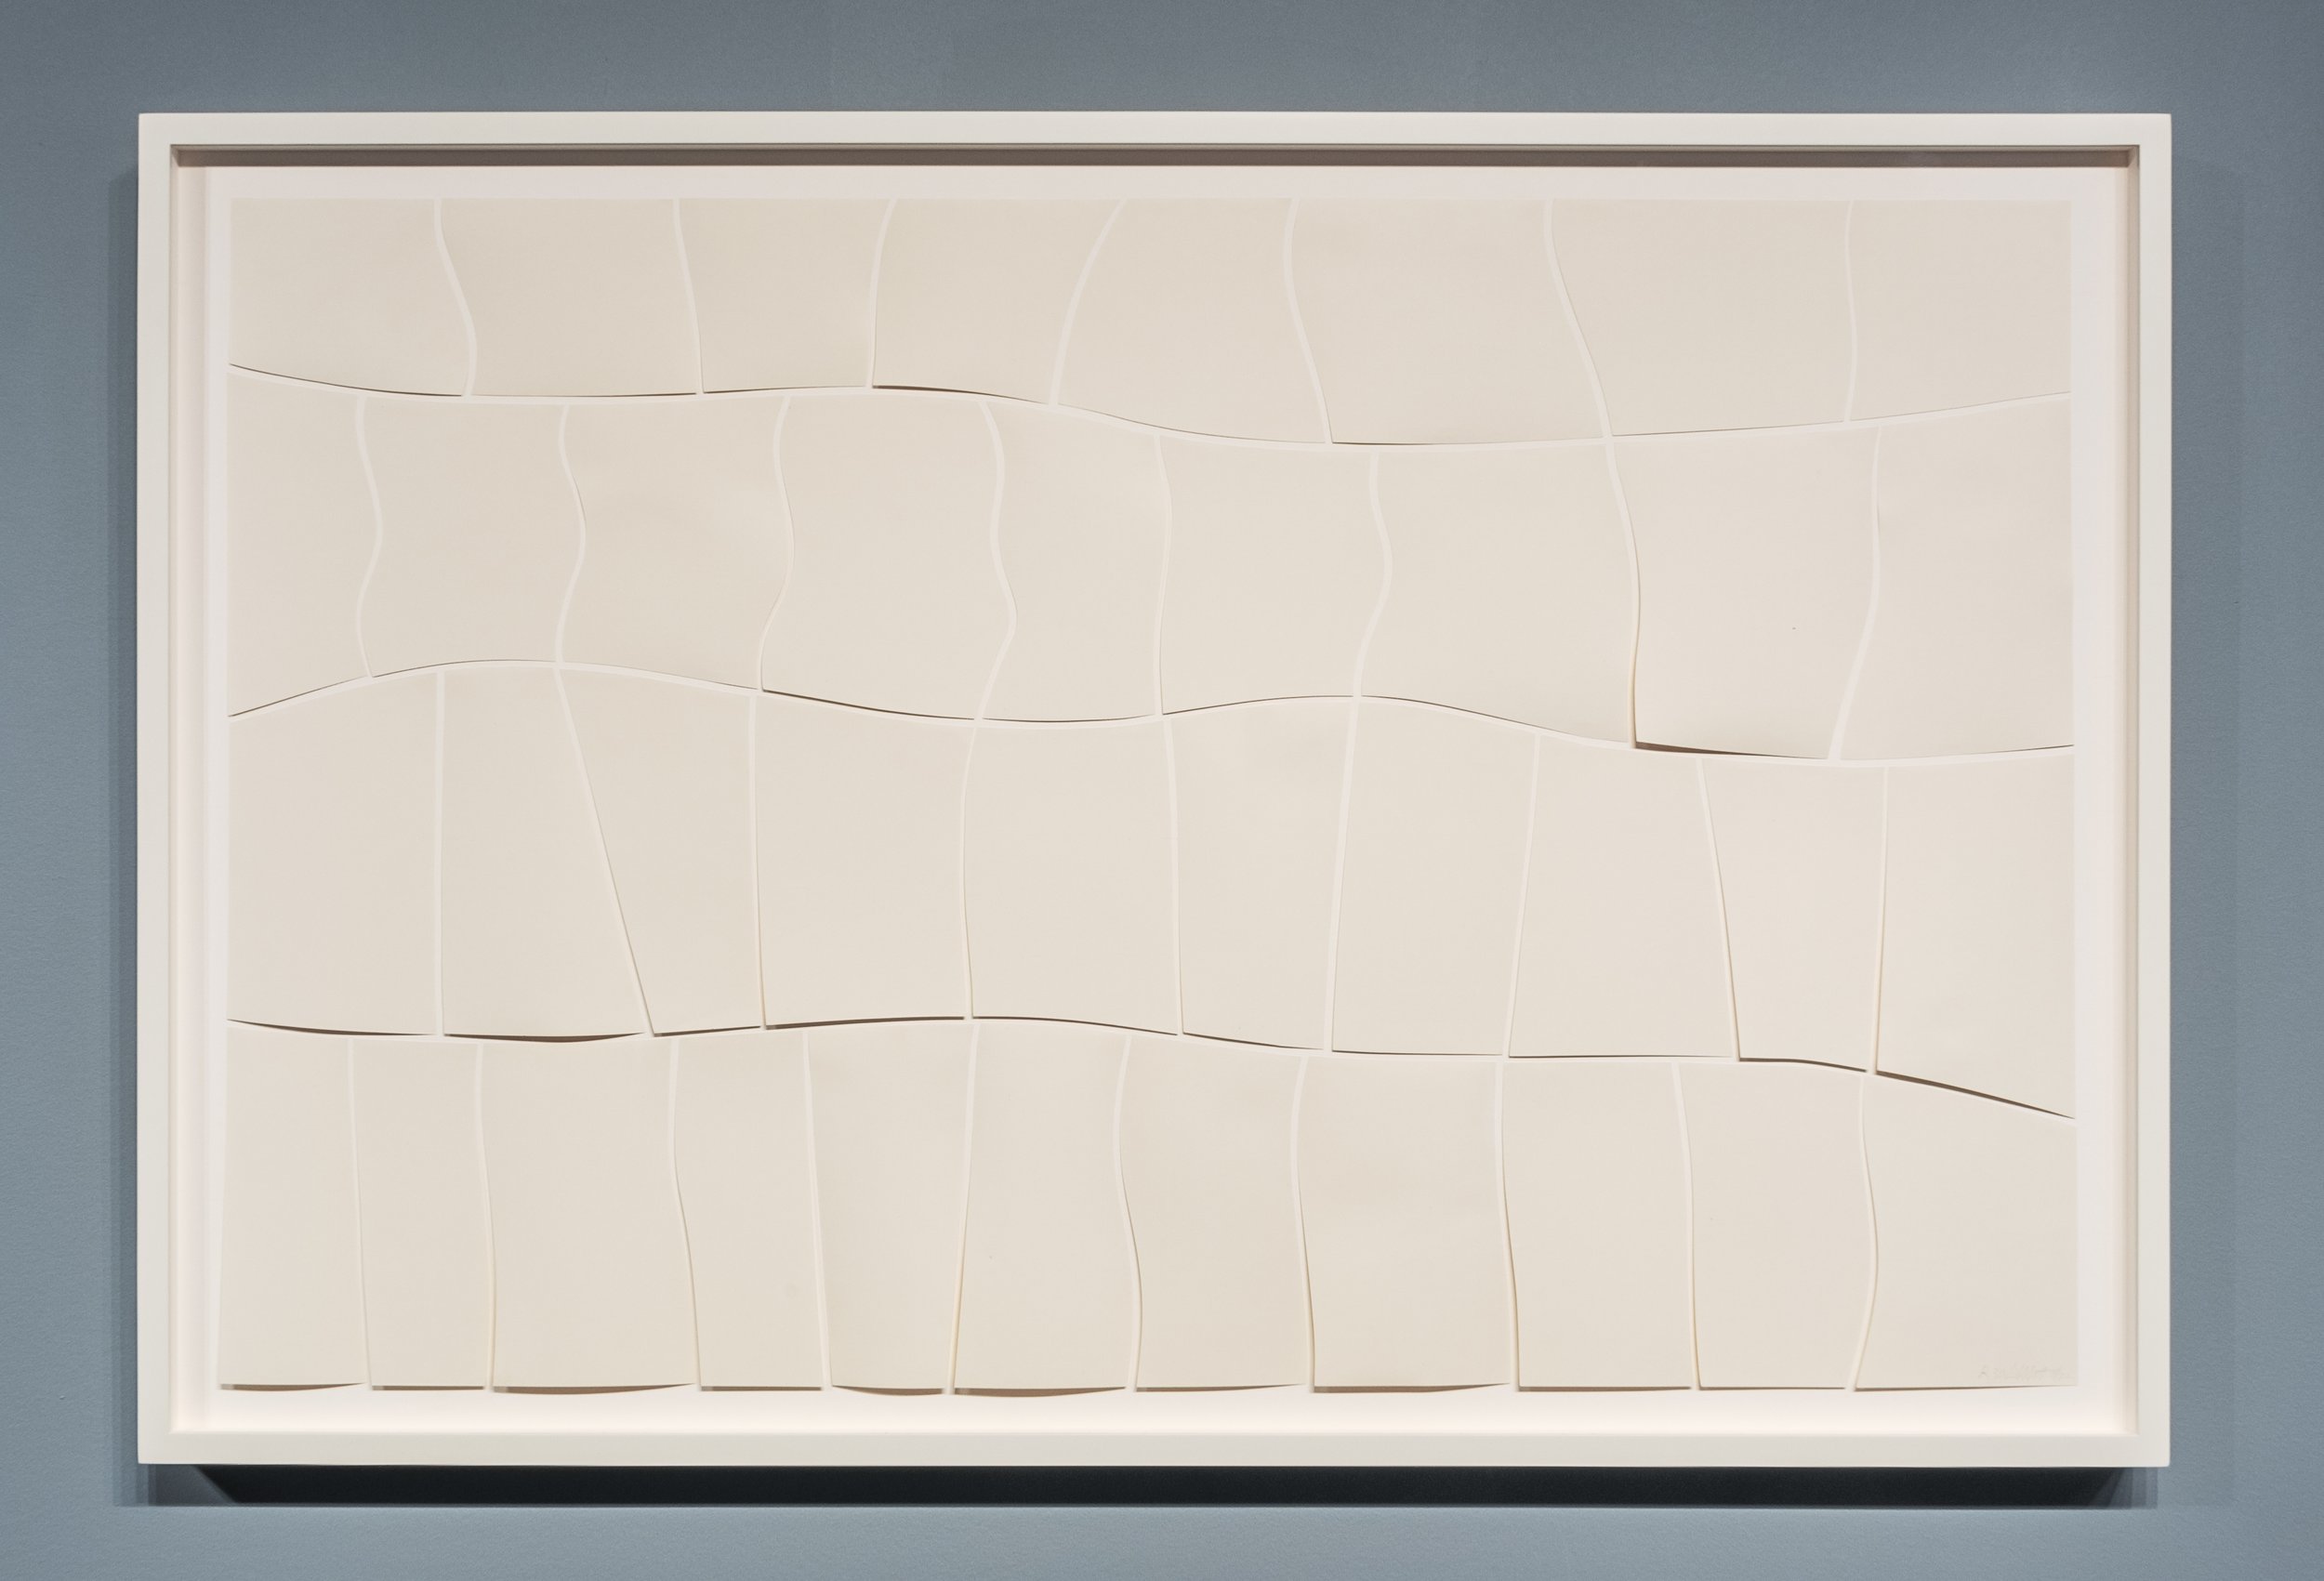  Sol LeWitt  R30, 1972 white paper 26 3/8 x 41 3/8 inches 